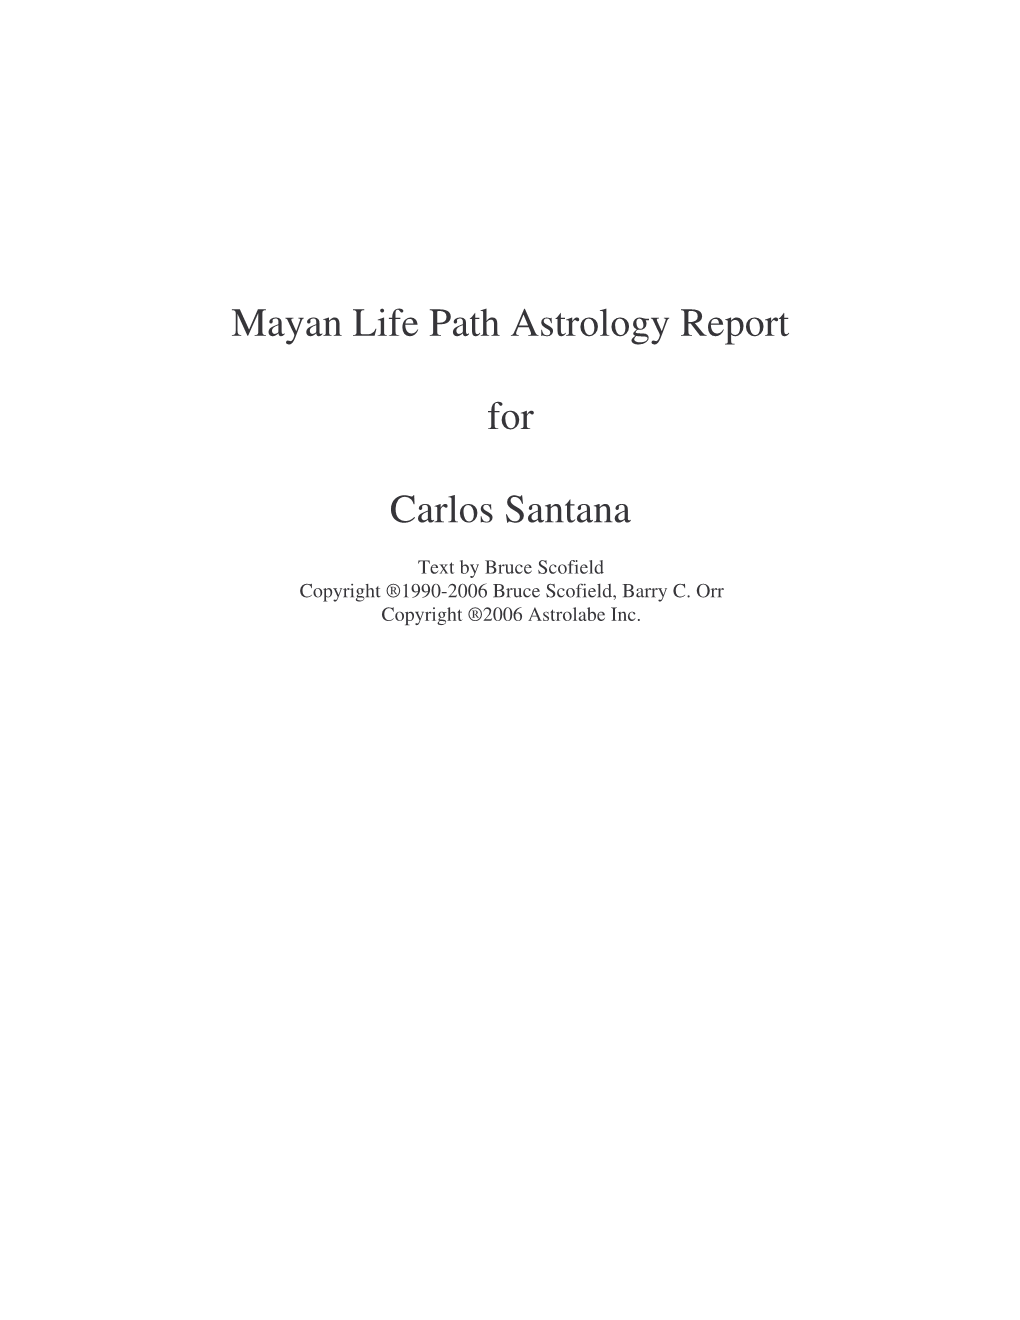 Mayan Life Path Astrology Report for Carlos Santana Page 2